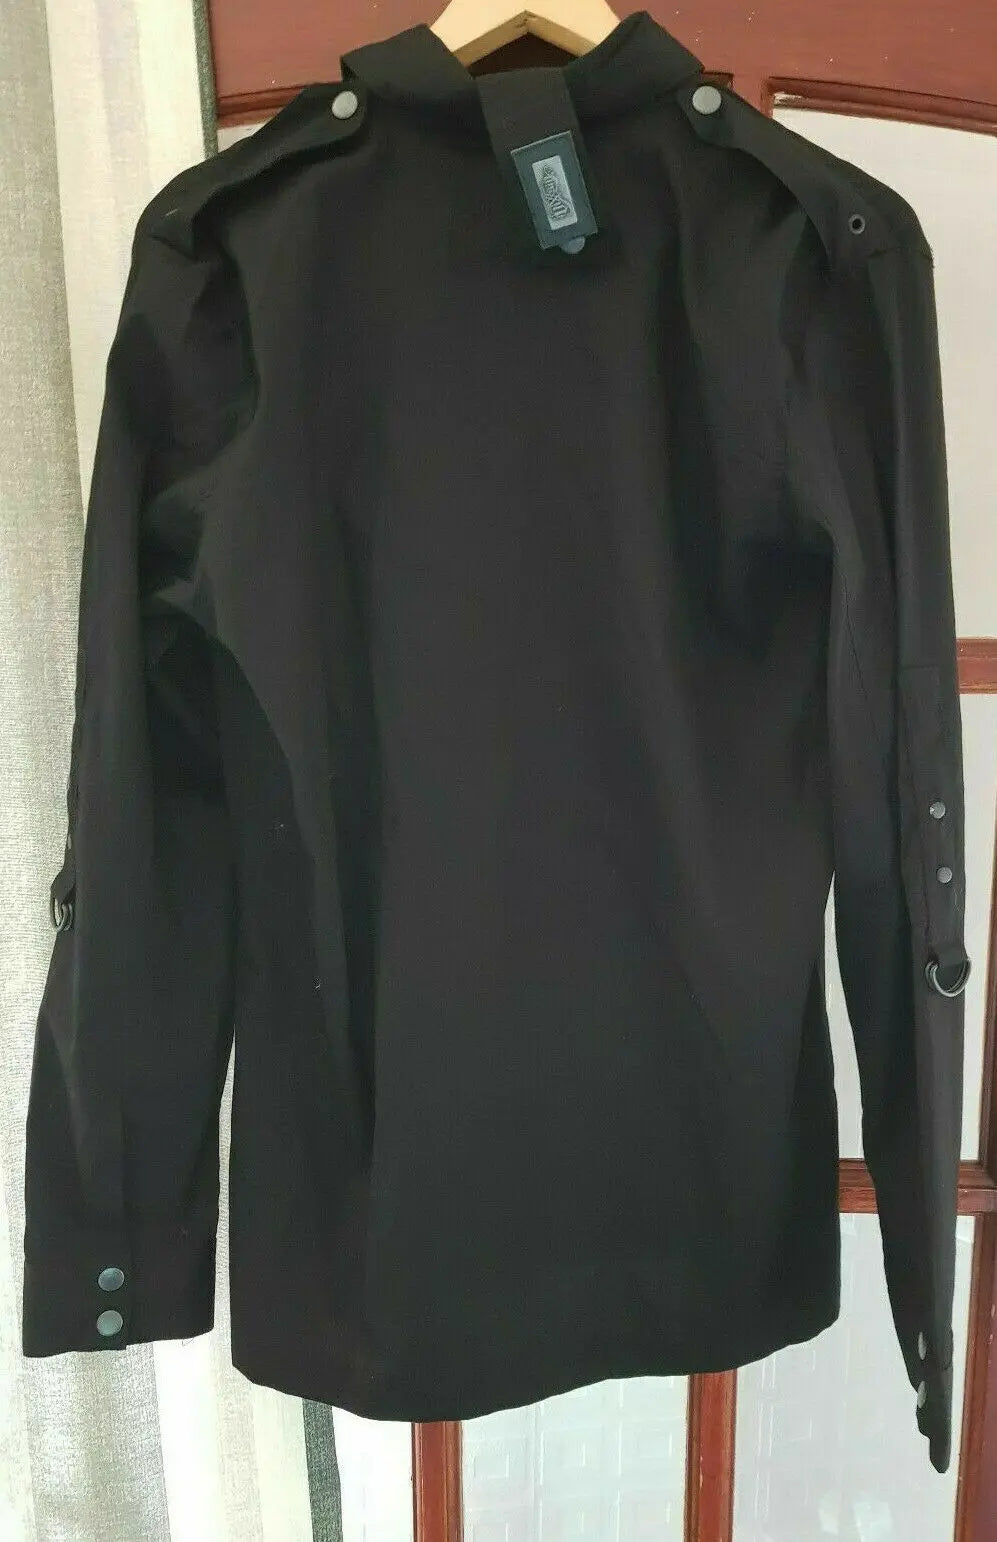 Vixxsin Torn Men's BLCK Short Sleeve Goth Alternative Black Shirt D RINGS.SIZE M Vixxsin